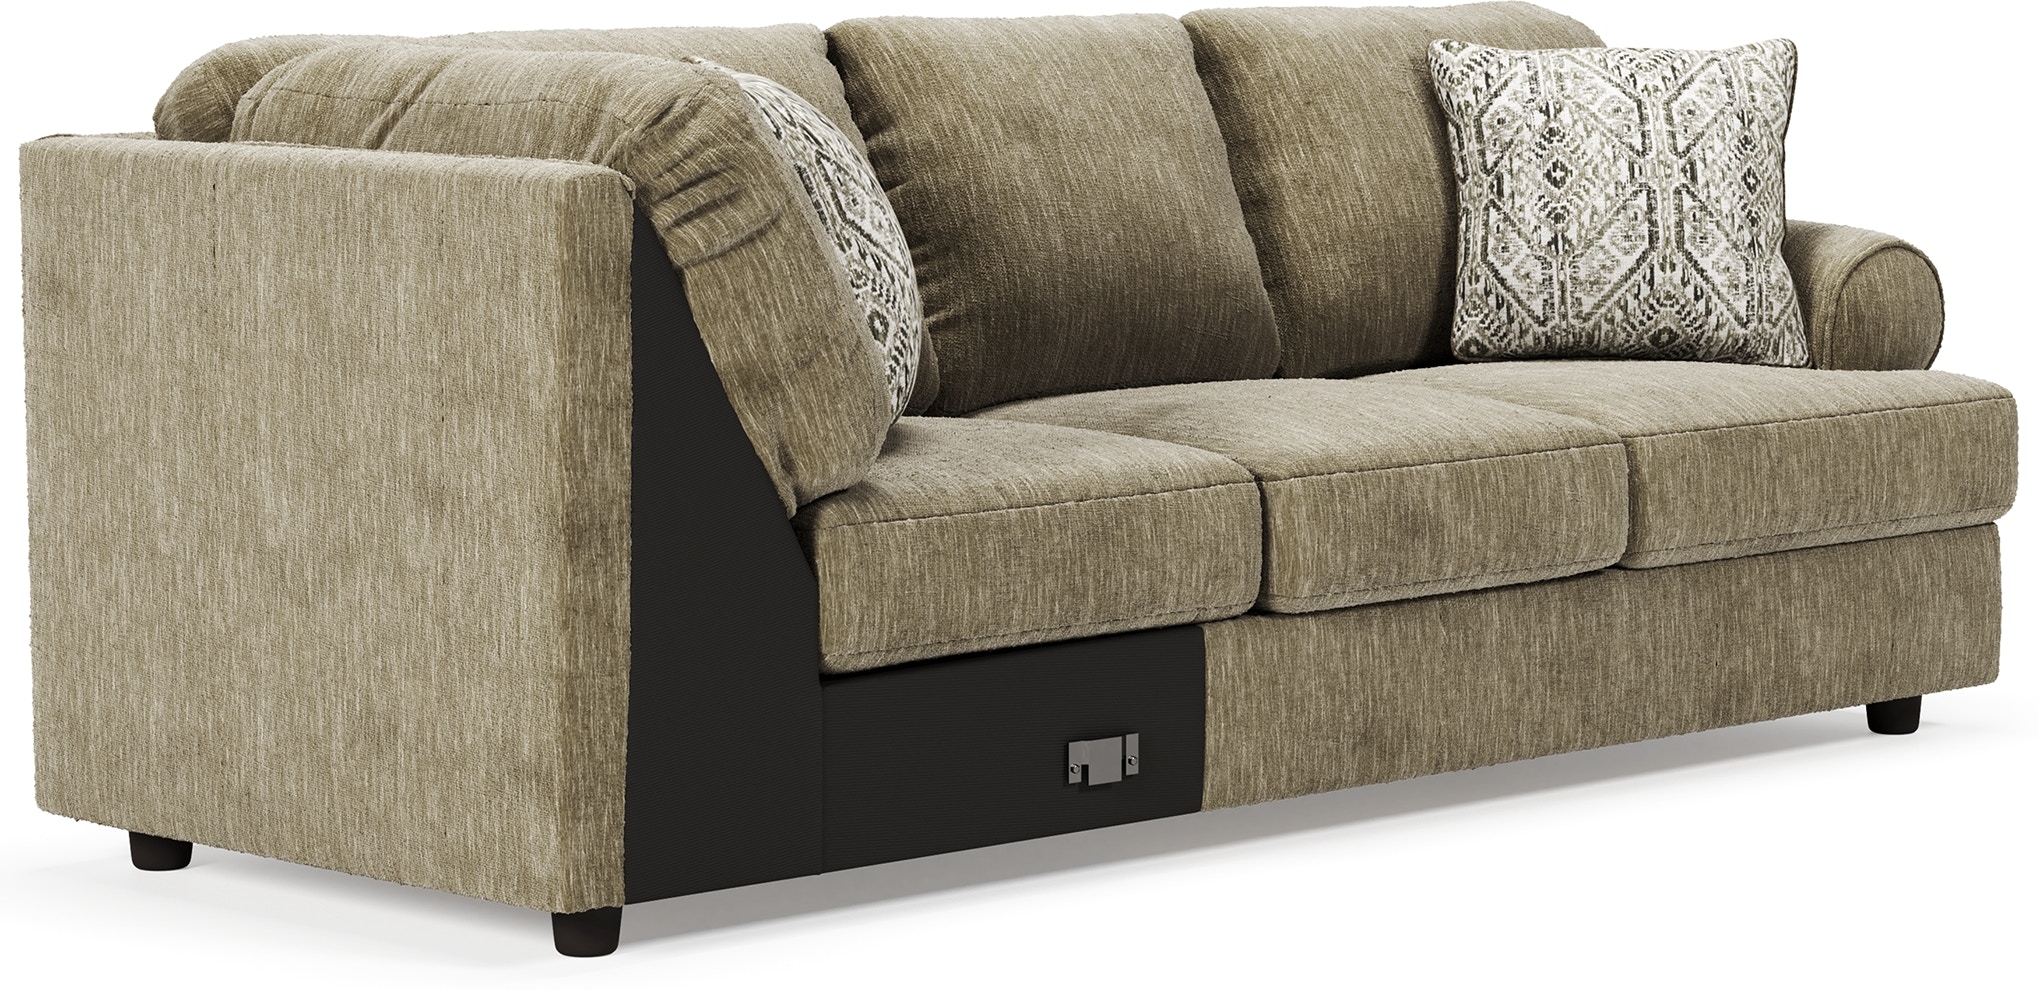 Signature Design By Ashley Living Room Hoylake Right Arm Facing Sofa 5640267 Furniture And Rug